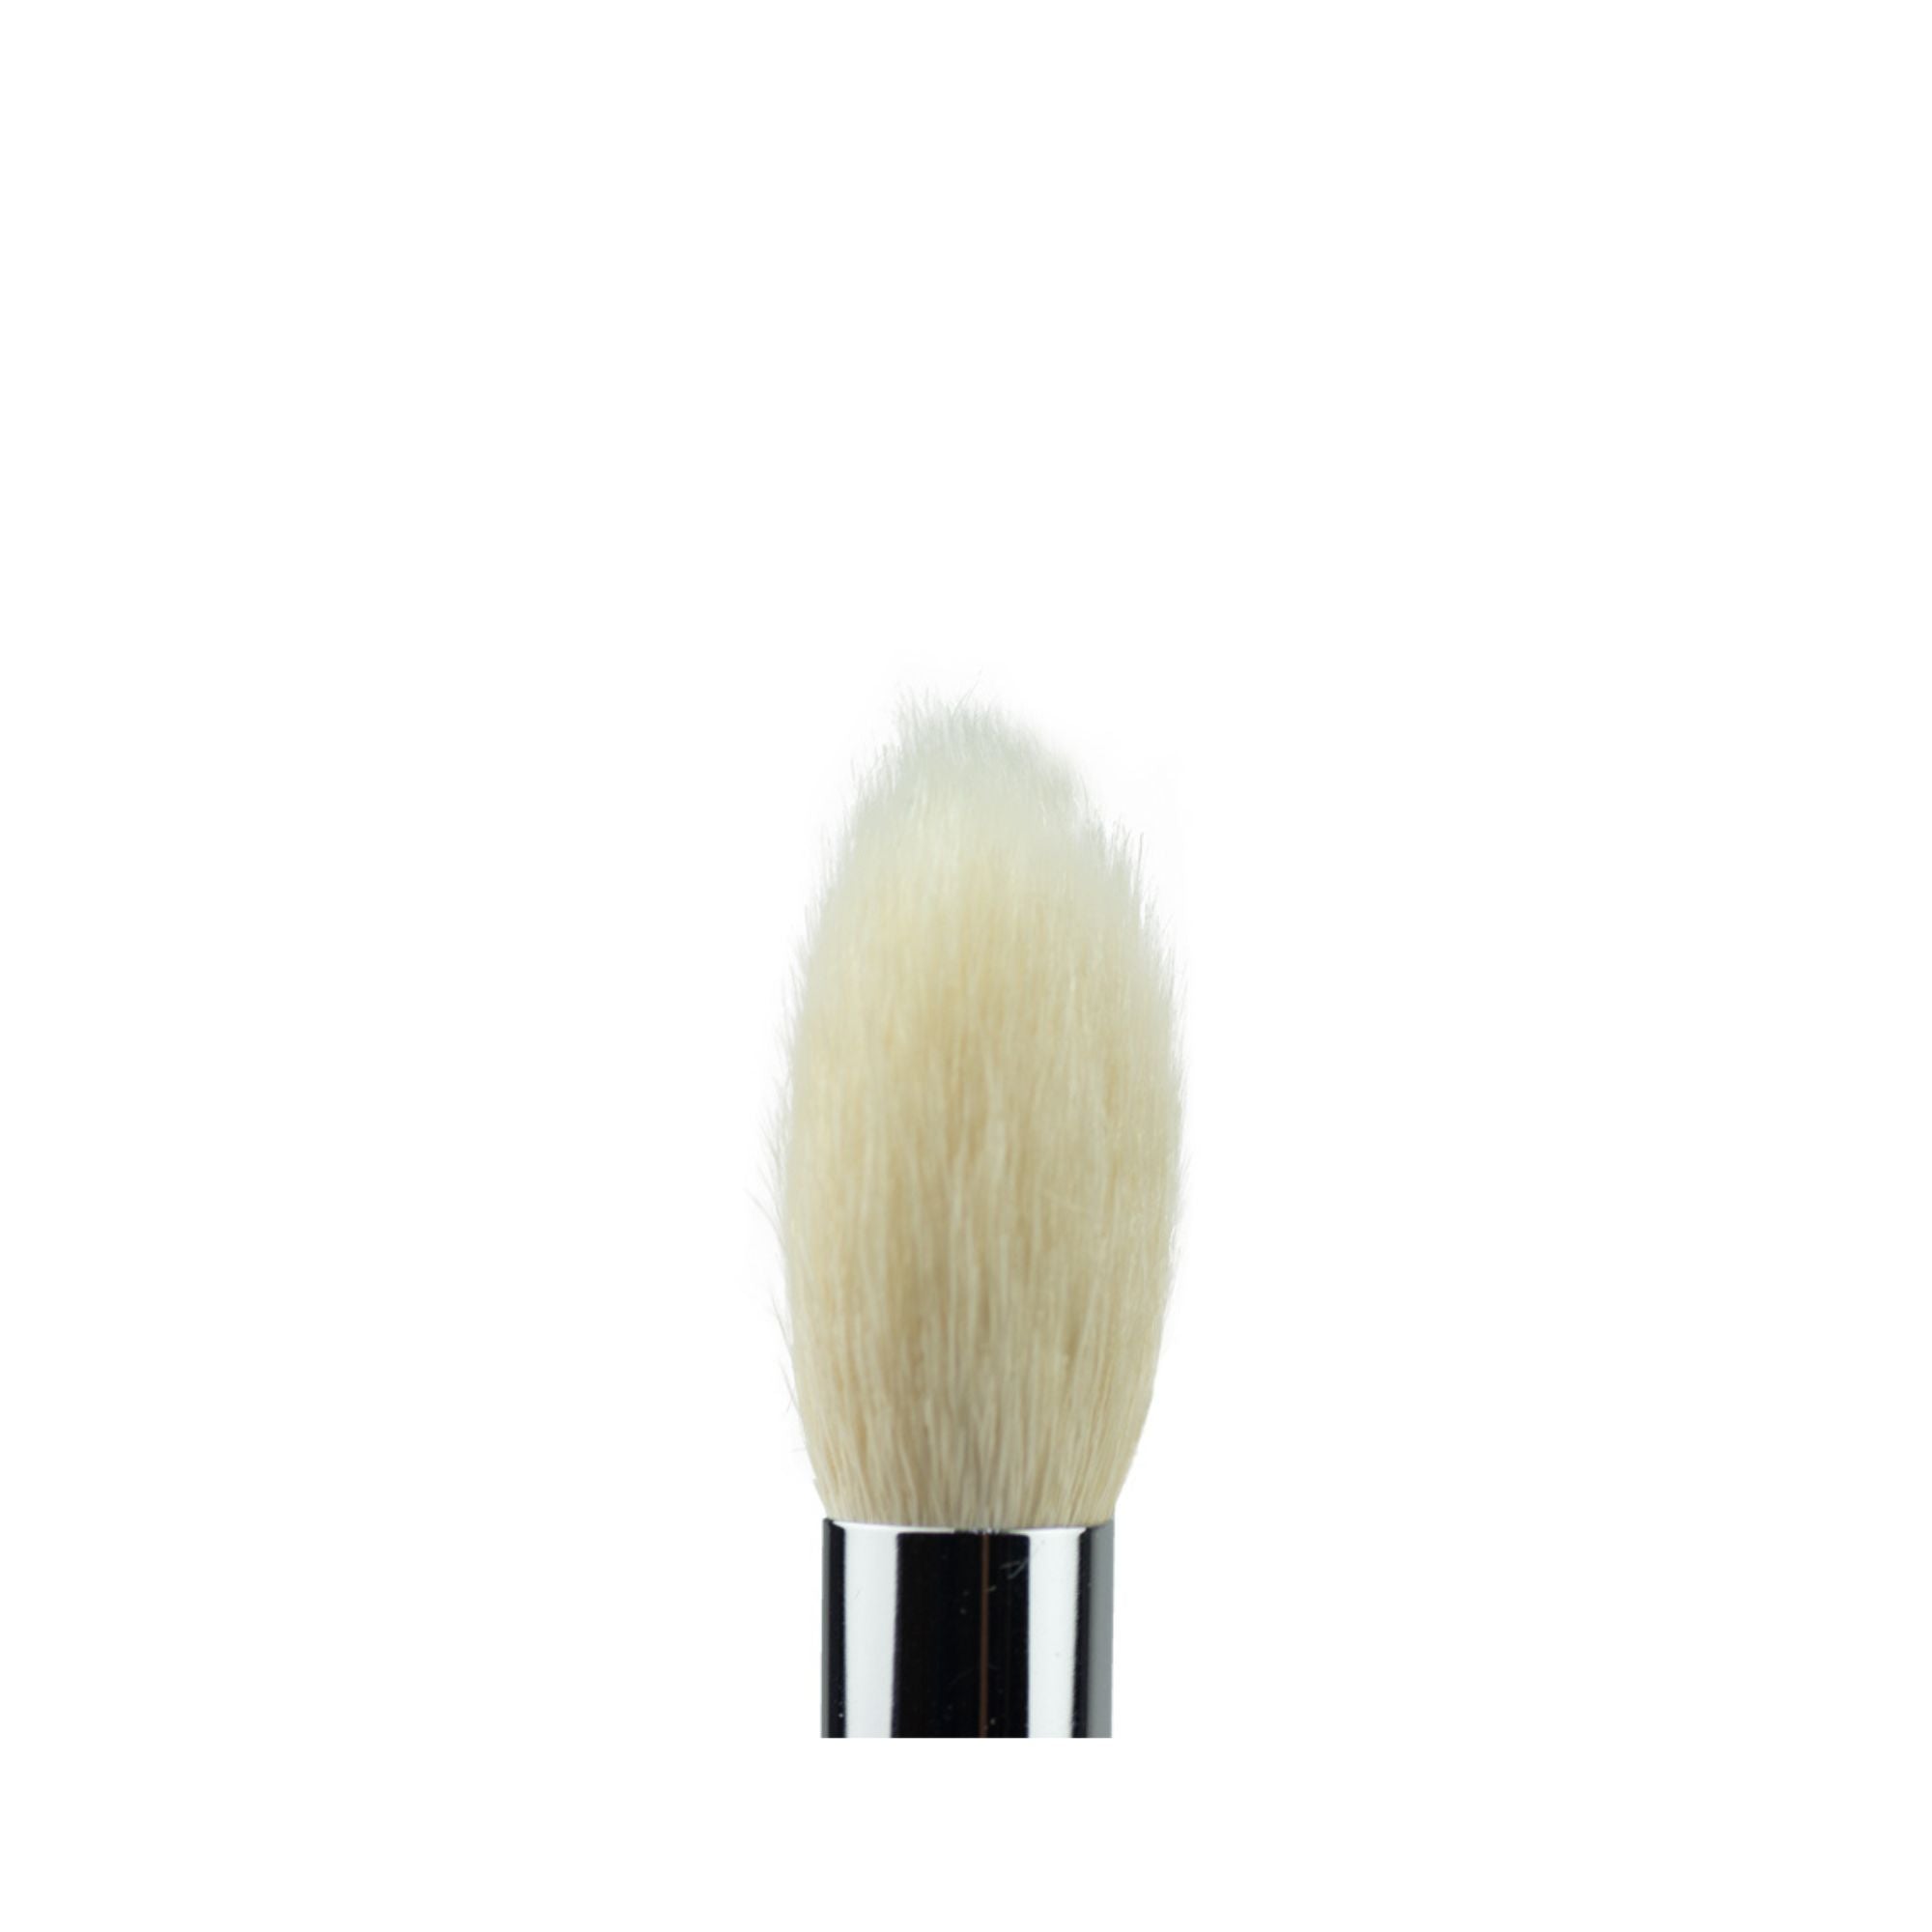 Tanseido DC14 Highlight Brush - Fude Beauty, Japanese Makeup Brushes